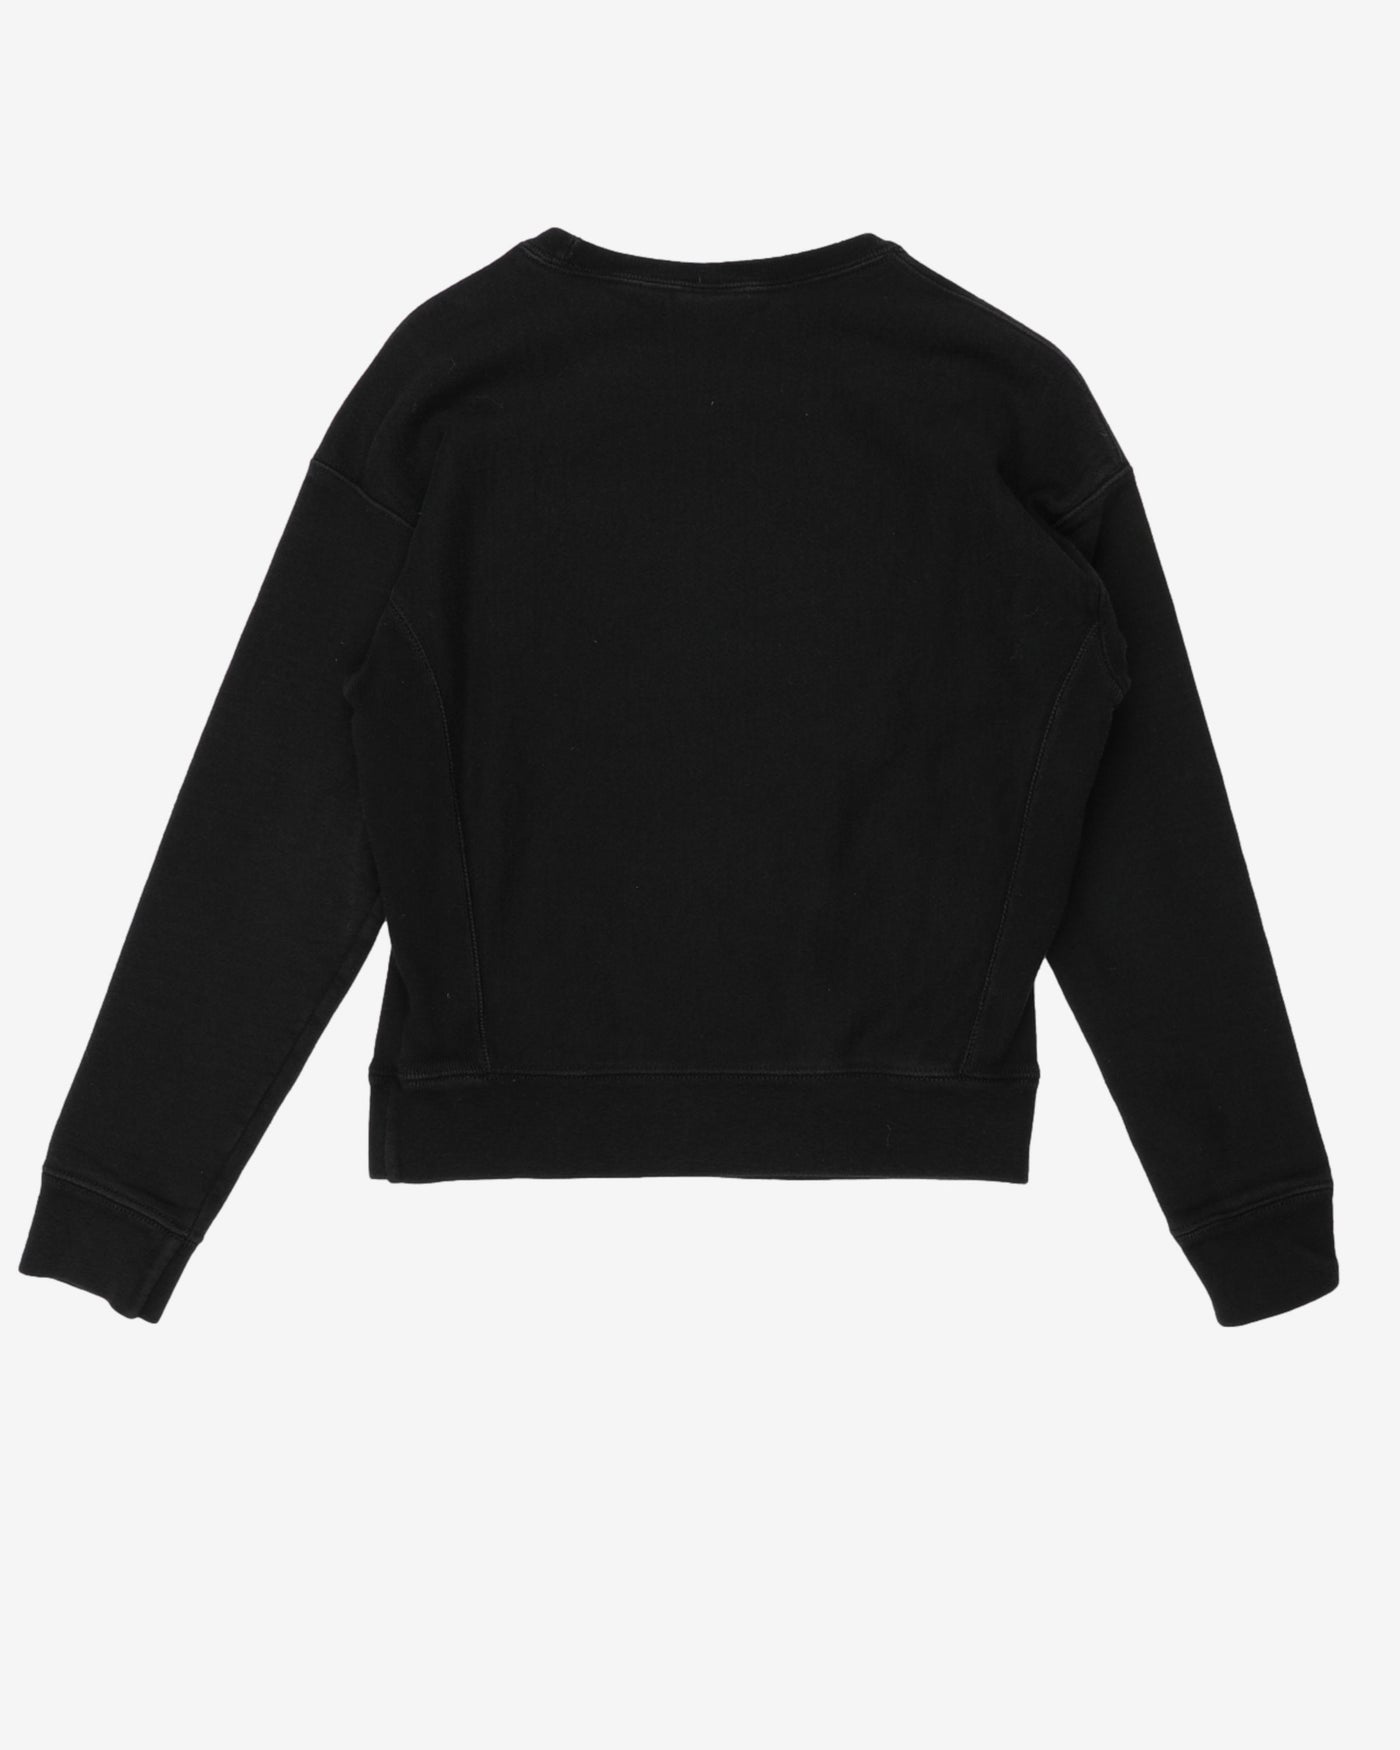 Champion Reverse Weave Black Sweatshirt - S